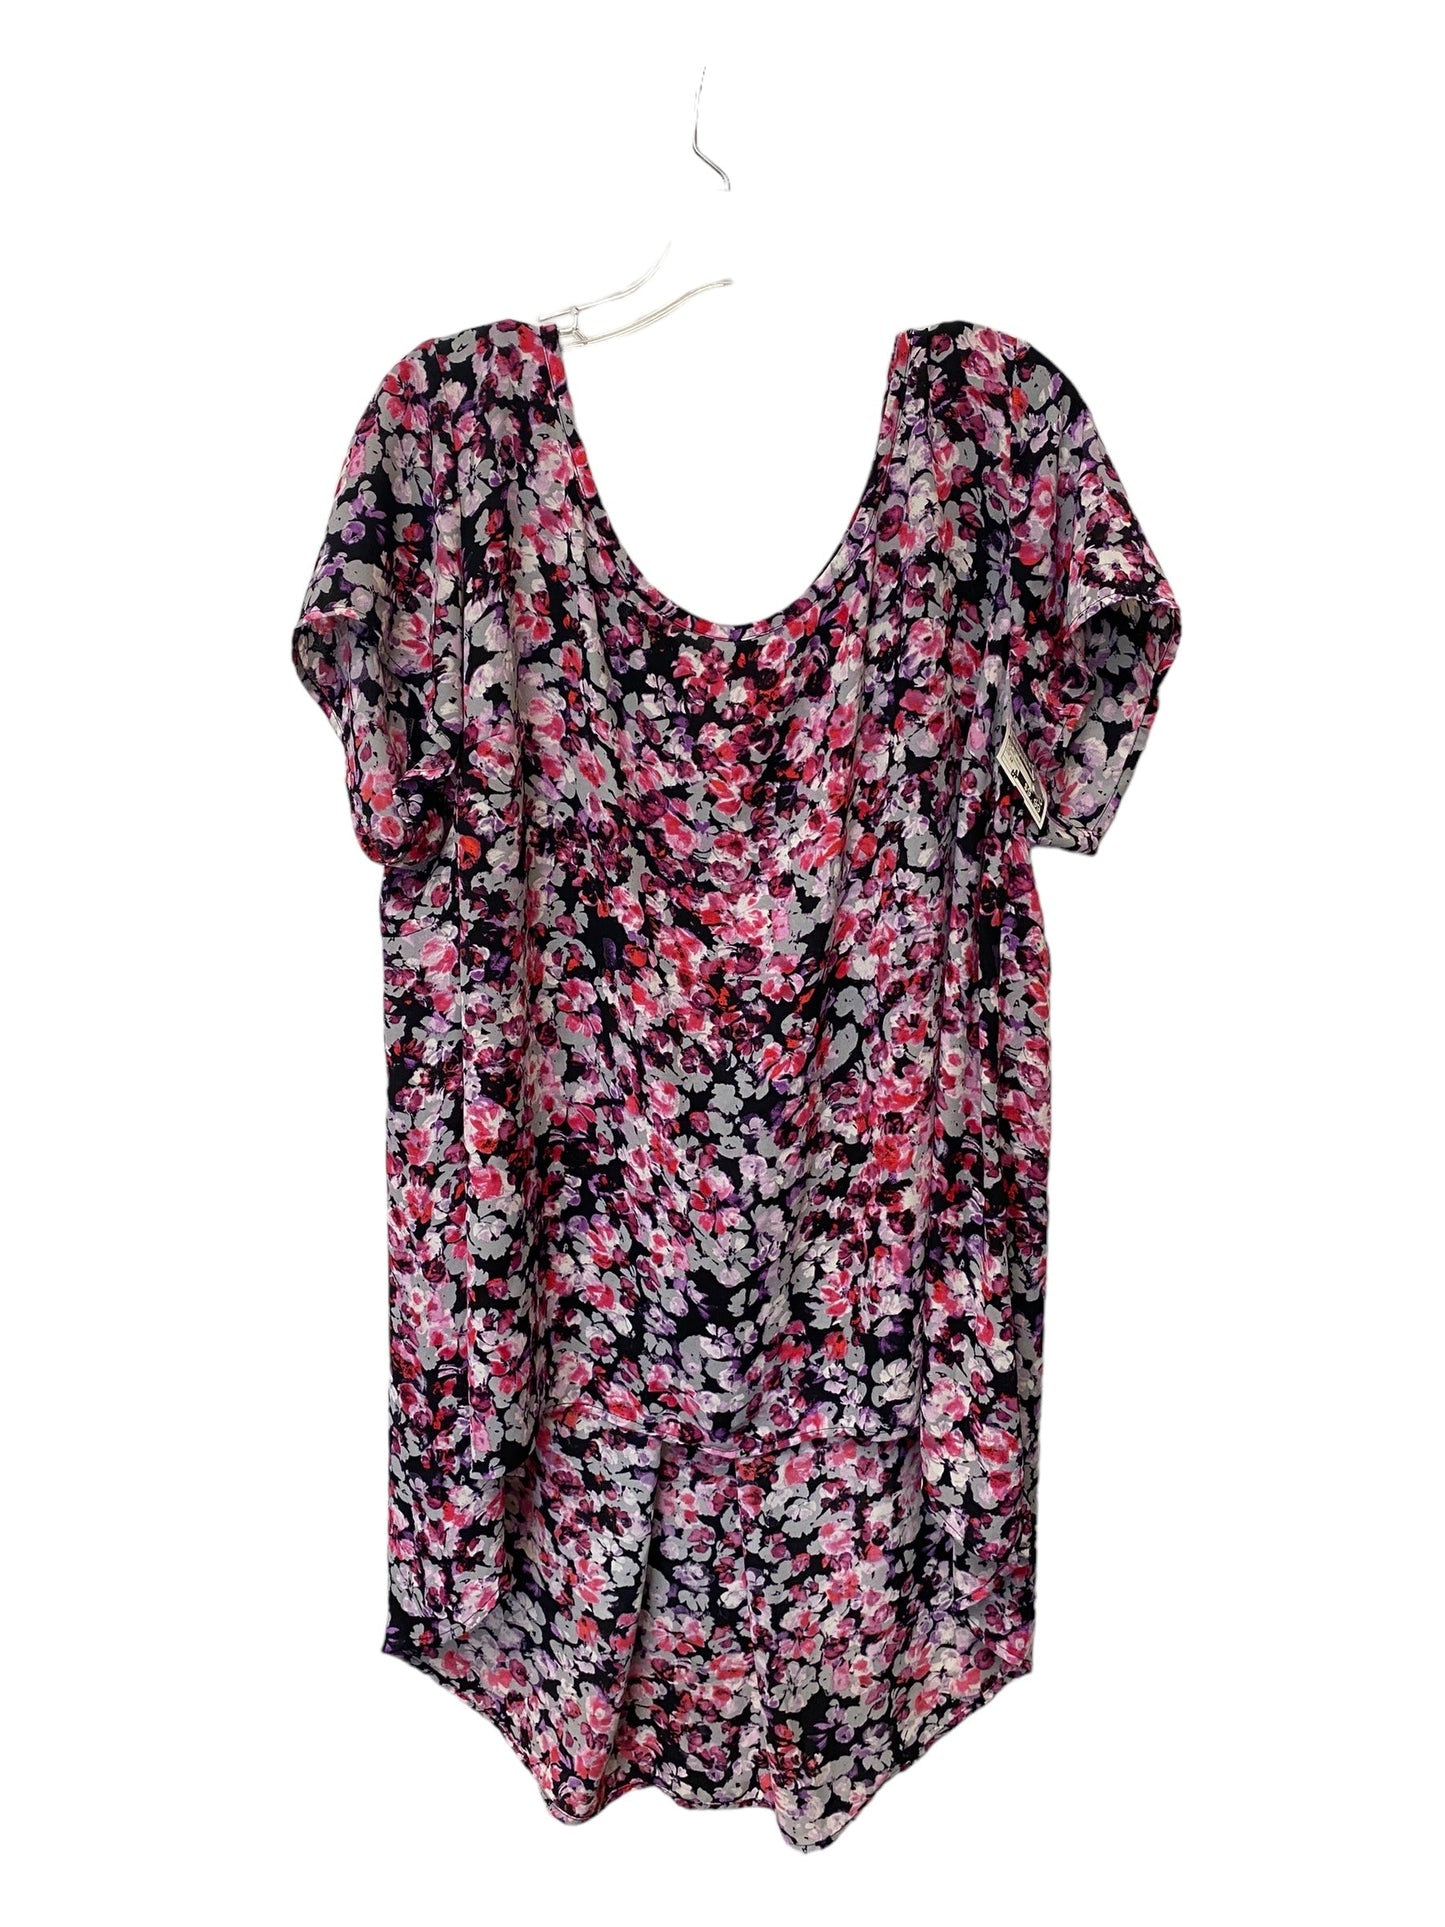 Floral Print Top Short Sleeve Boutique +, Size 1x